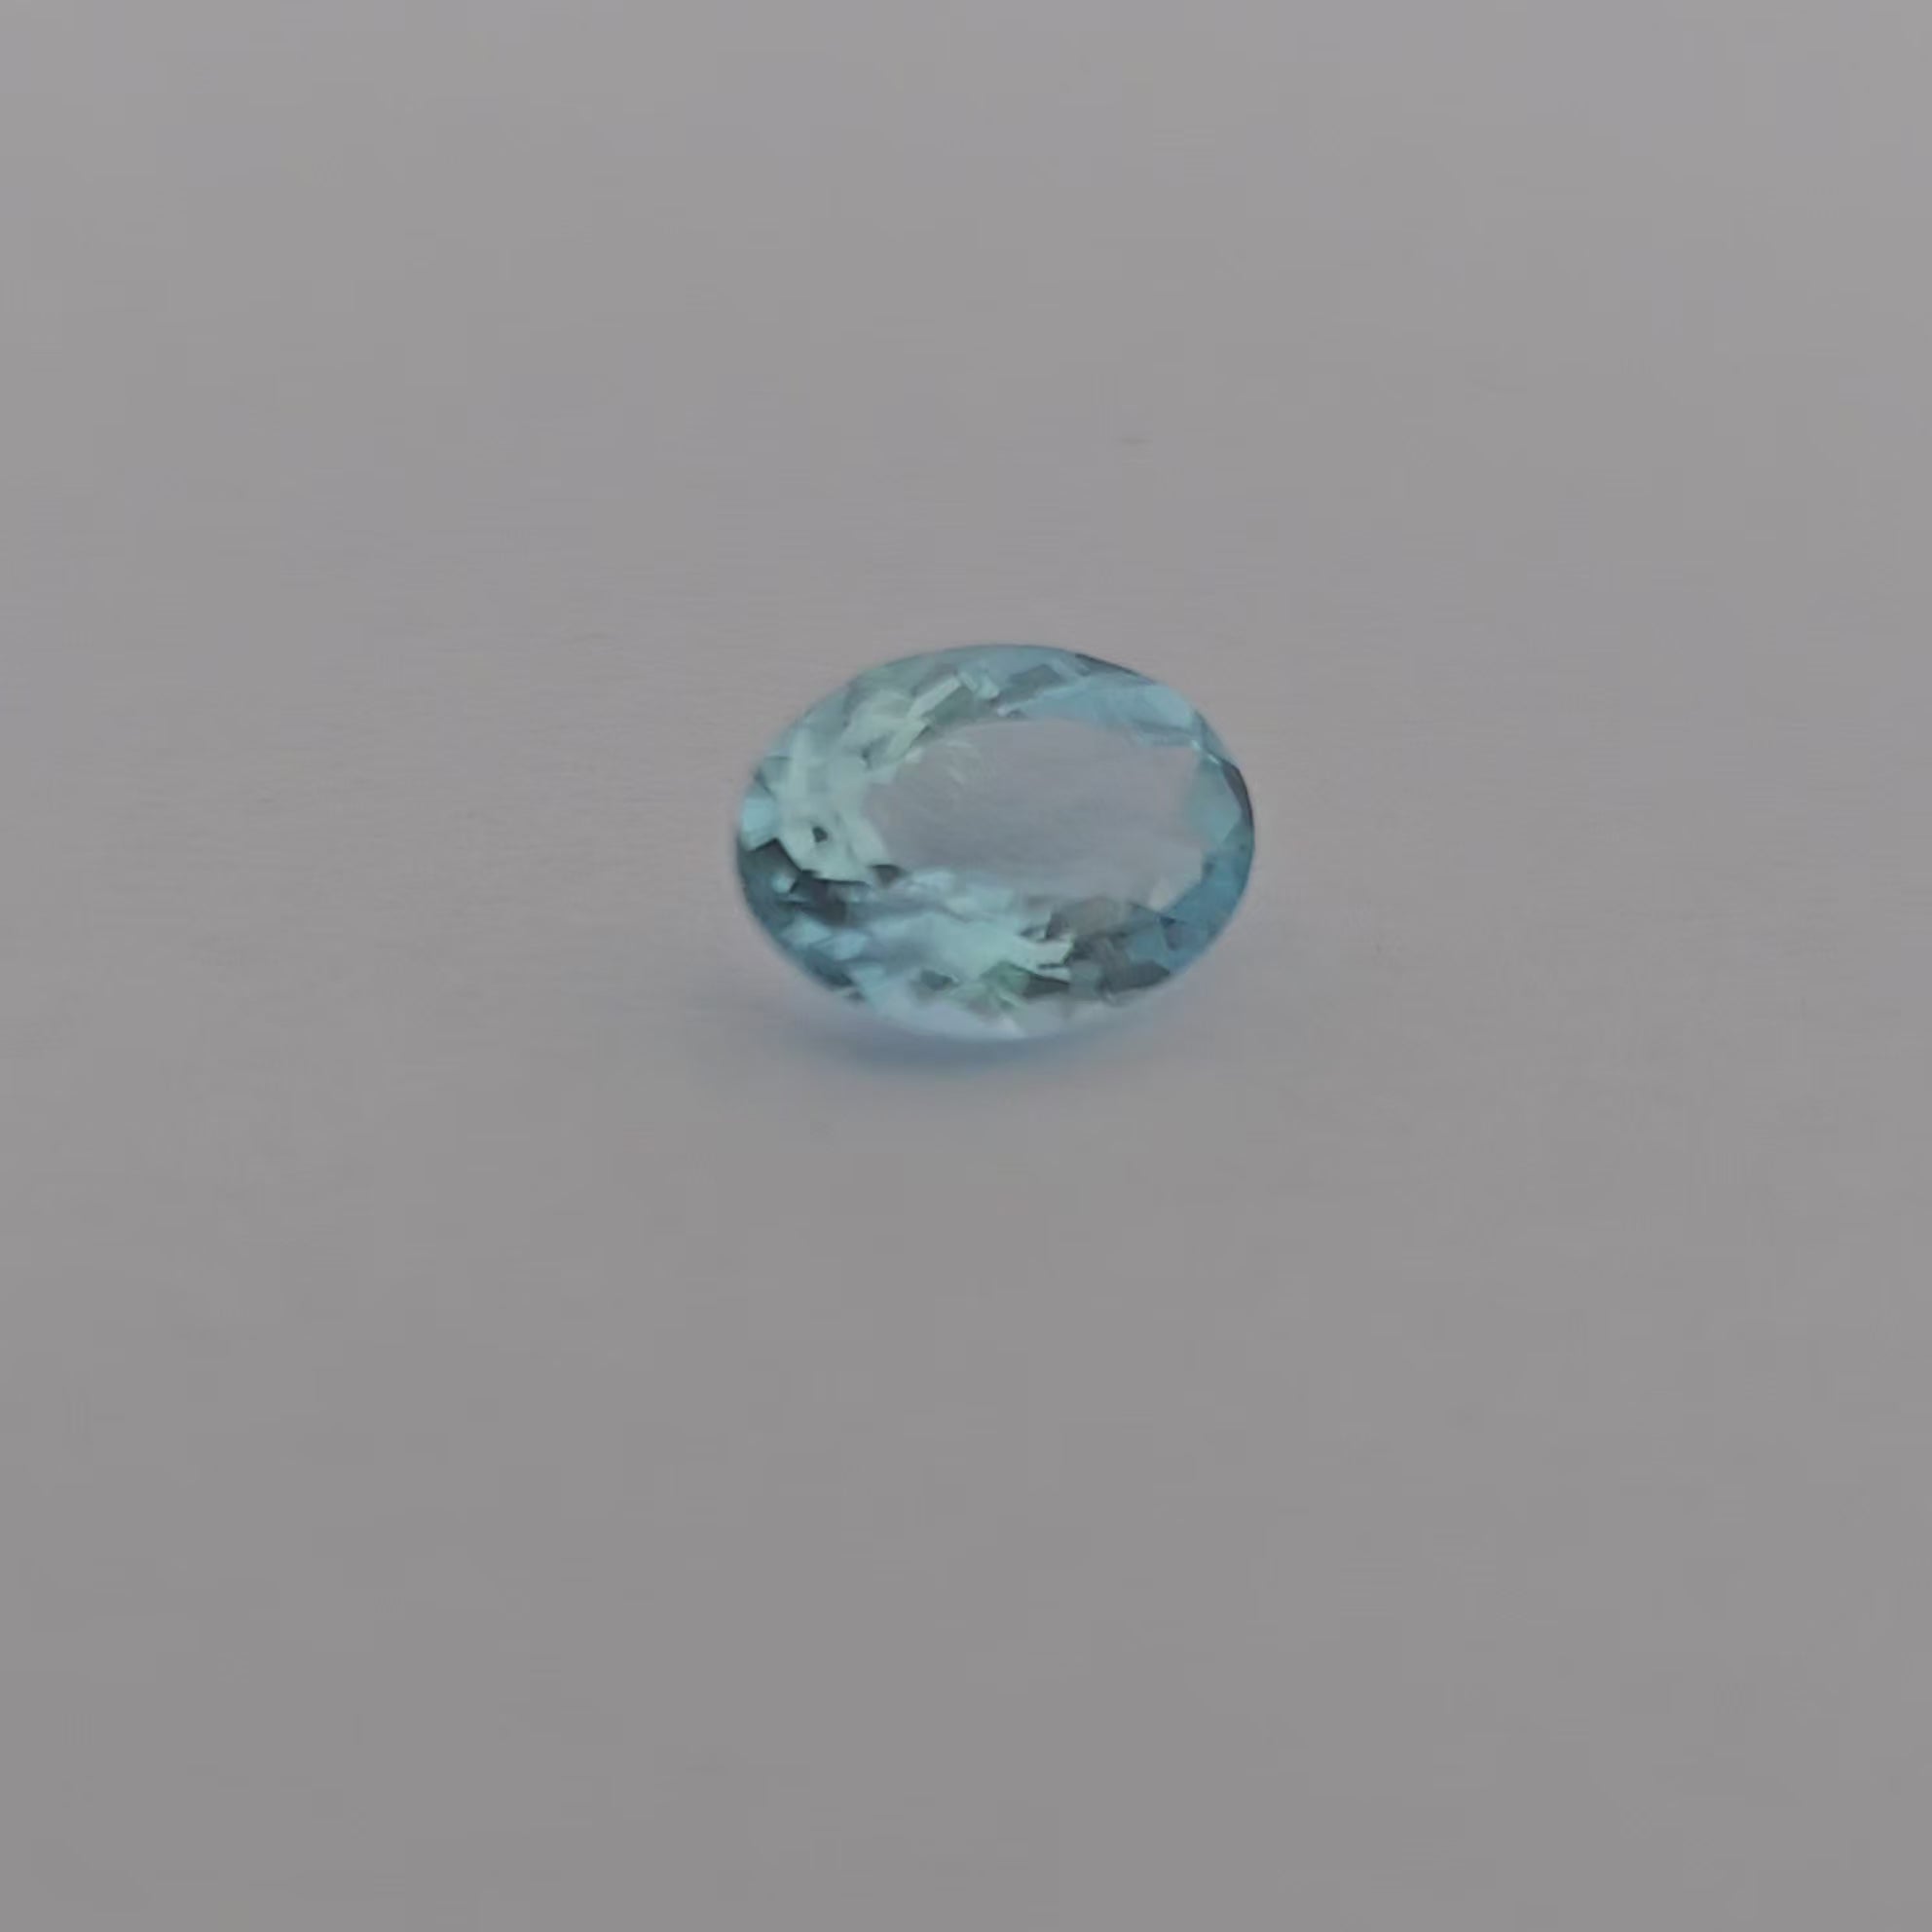 loose Natural Aquamarine Stone 1.13 Carats Oval Shape 8.3 x 6.3 mm